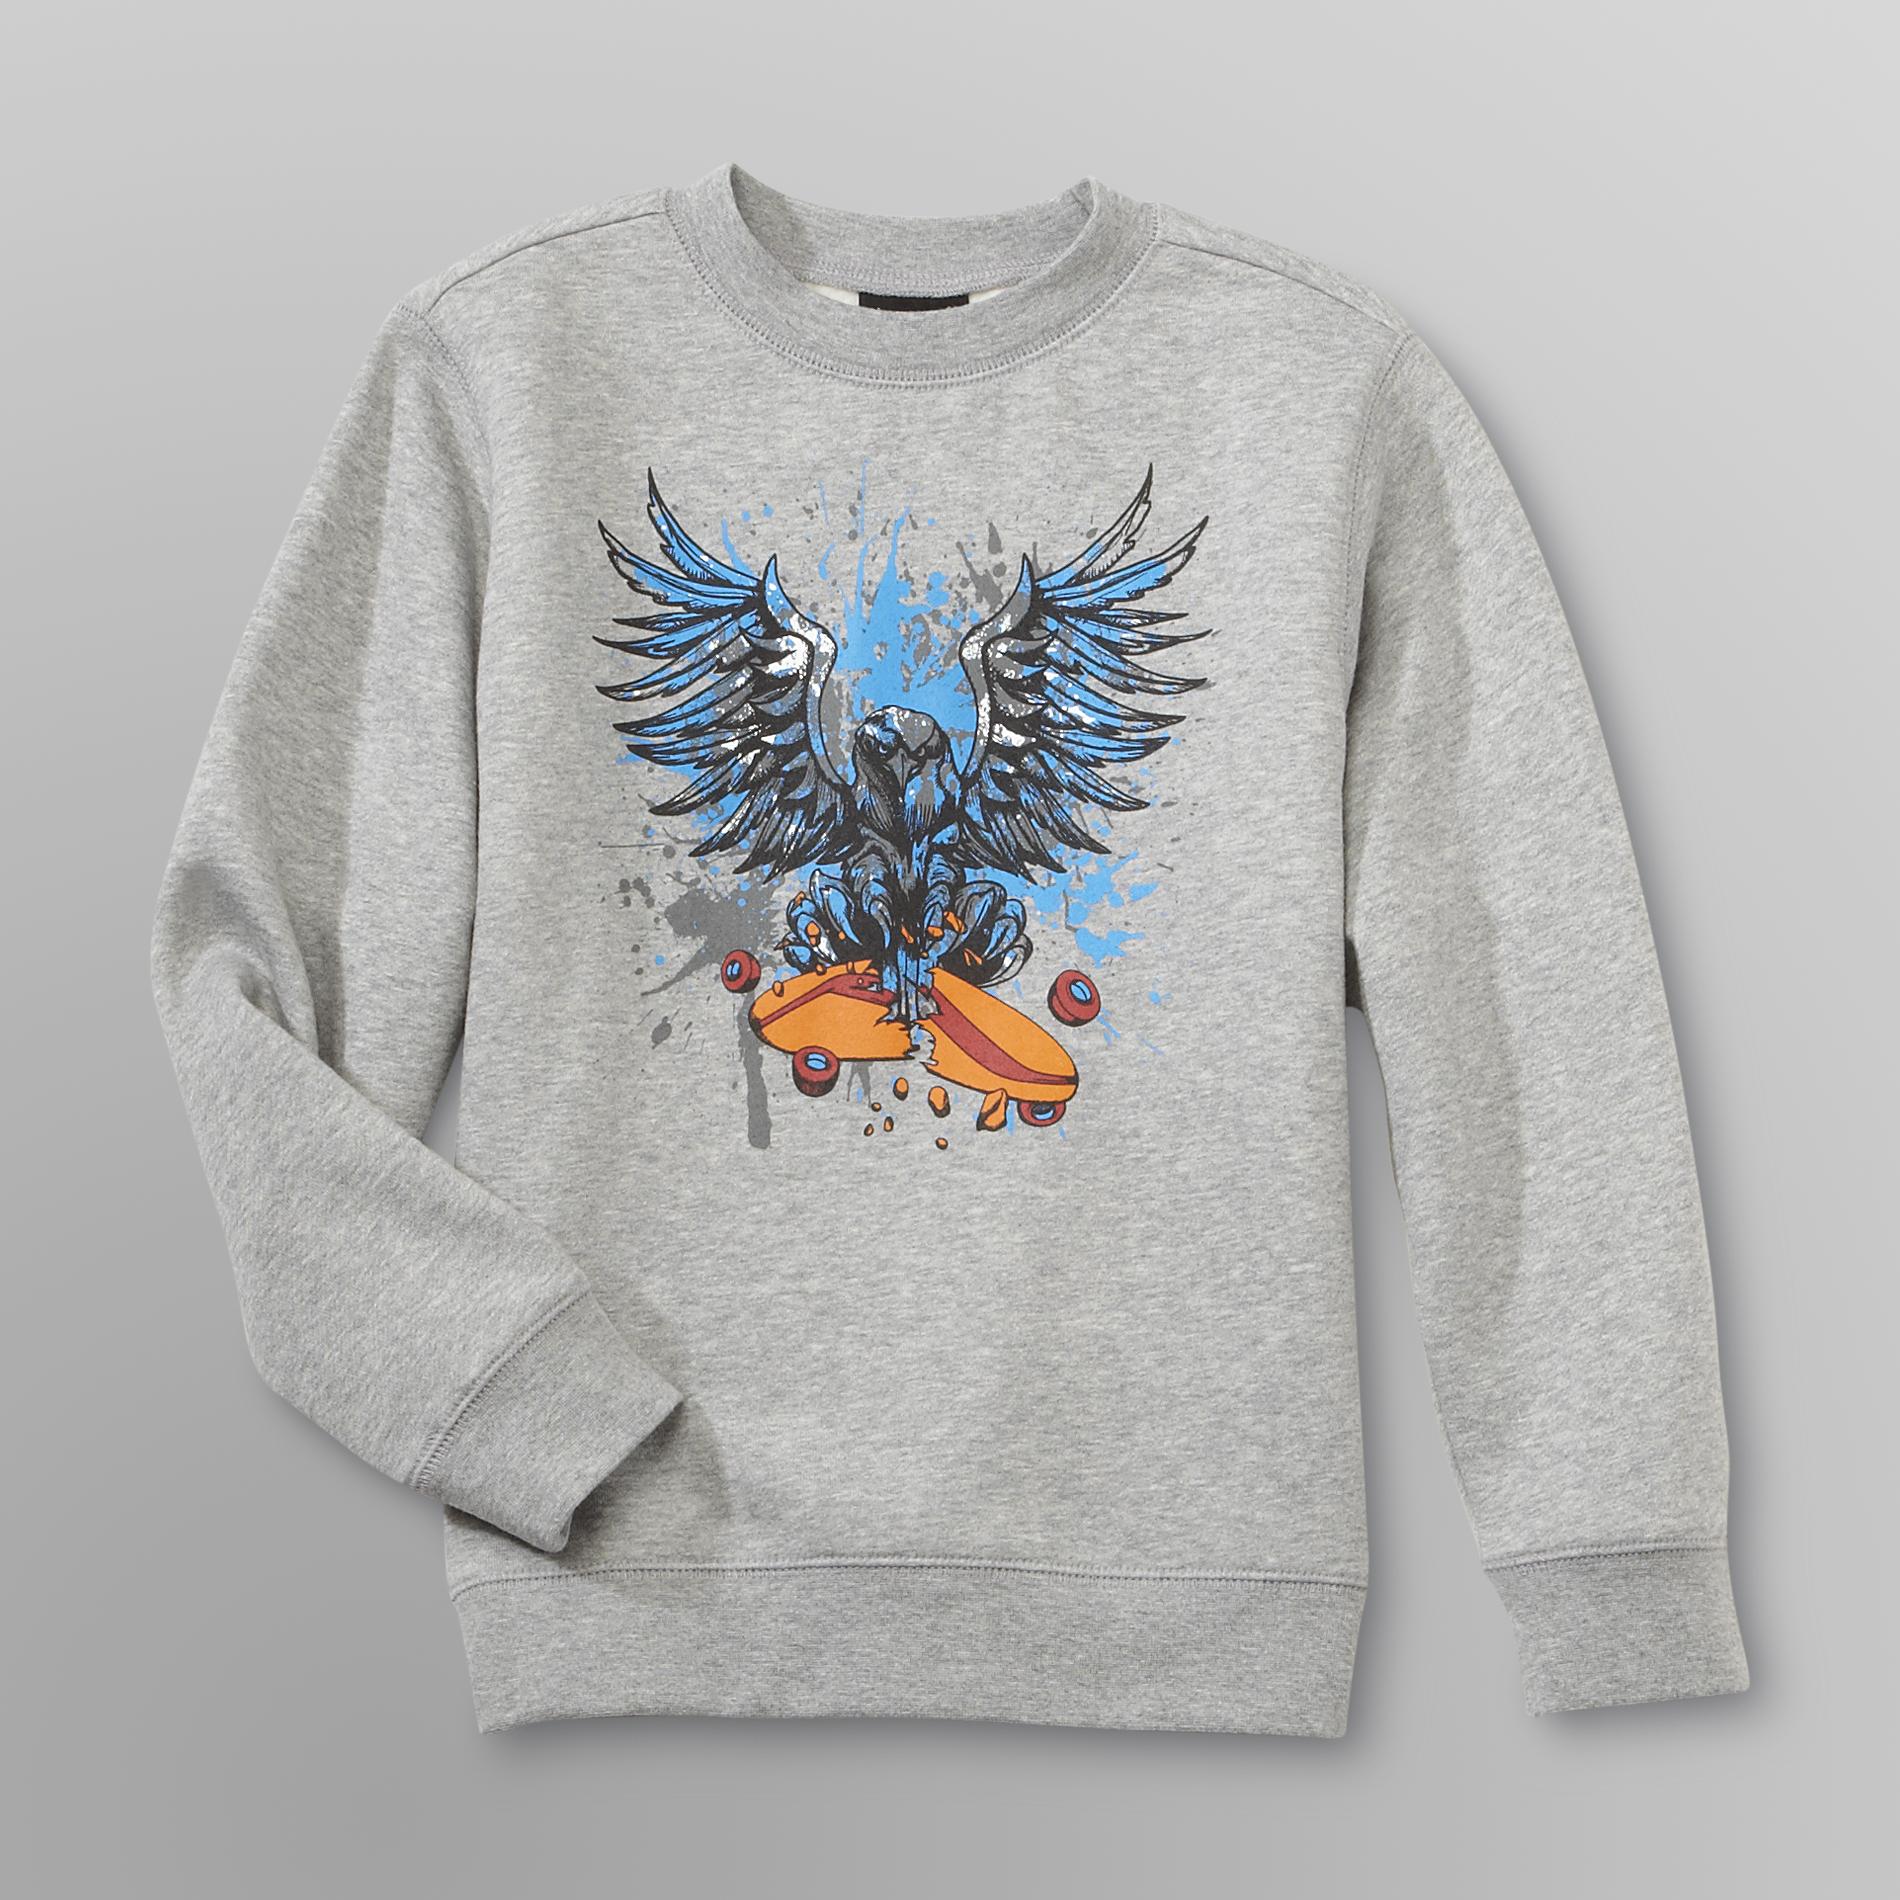 Joe Boxer Boy's Graphic Sweatshirt - Skateboarding Eagle